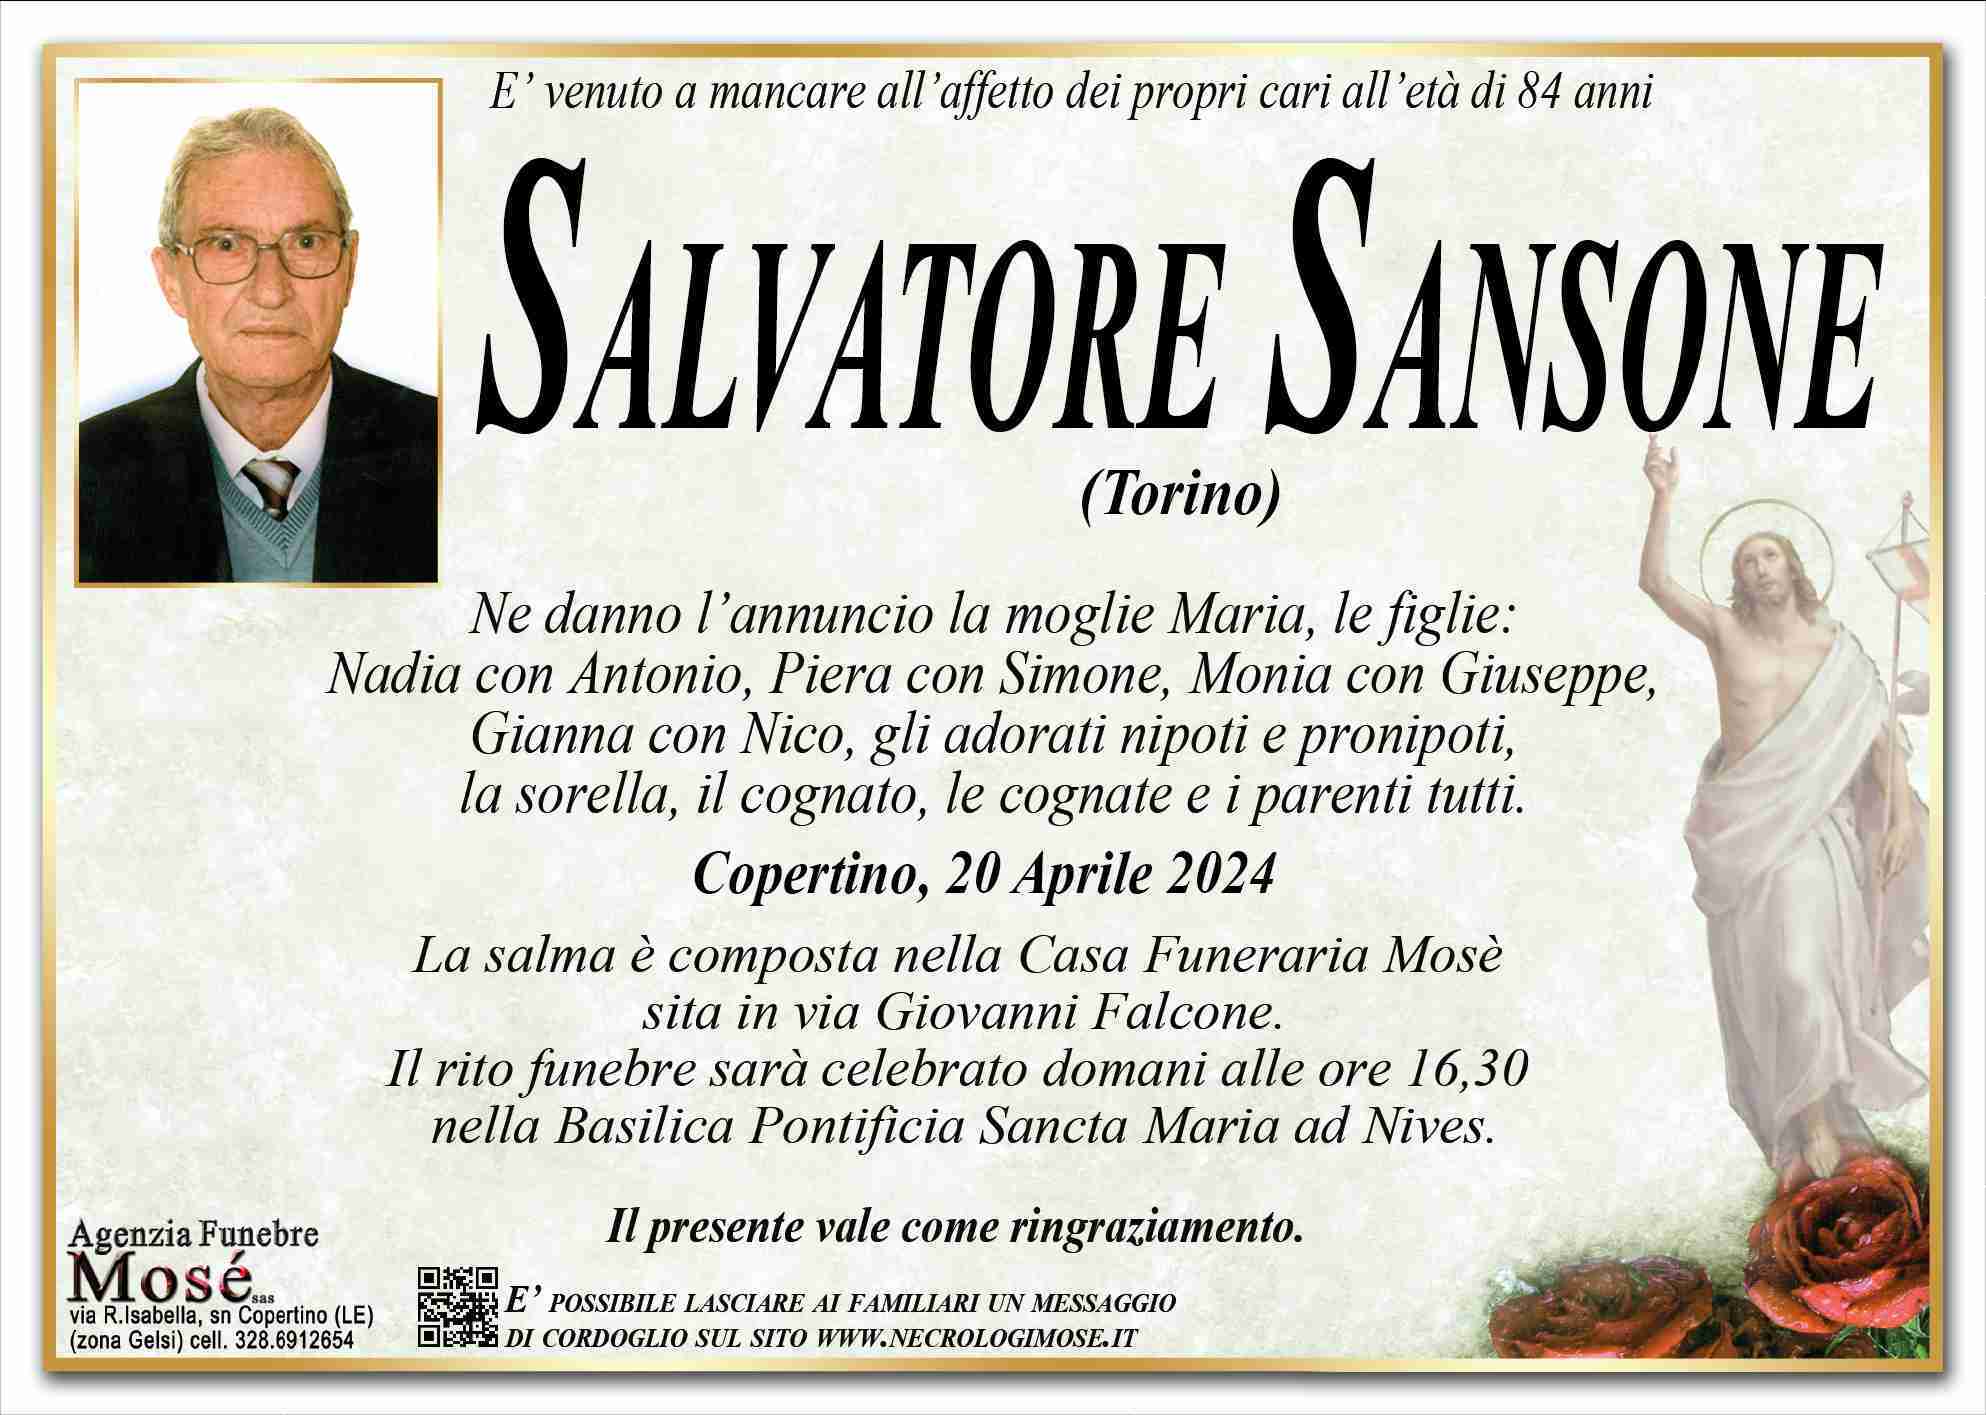 Salvatore Sansone